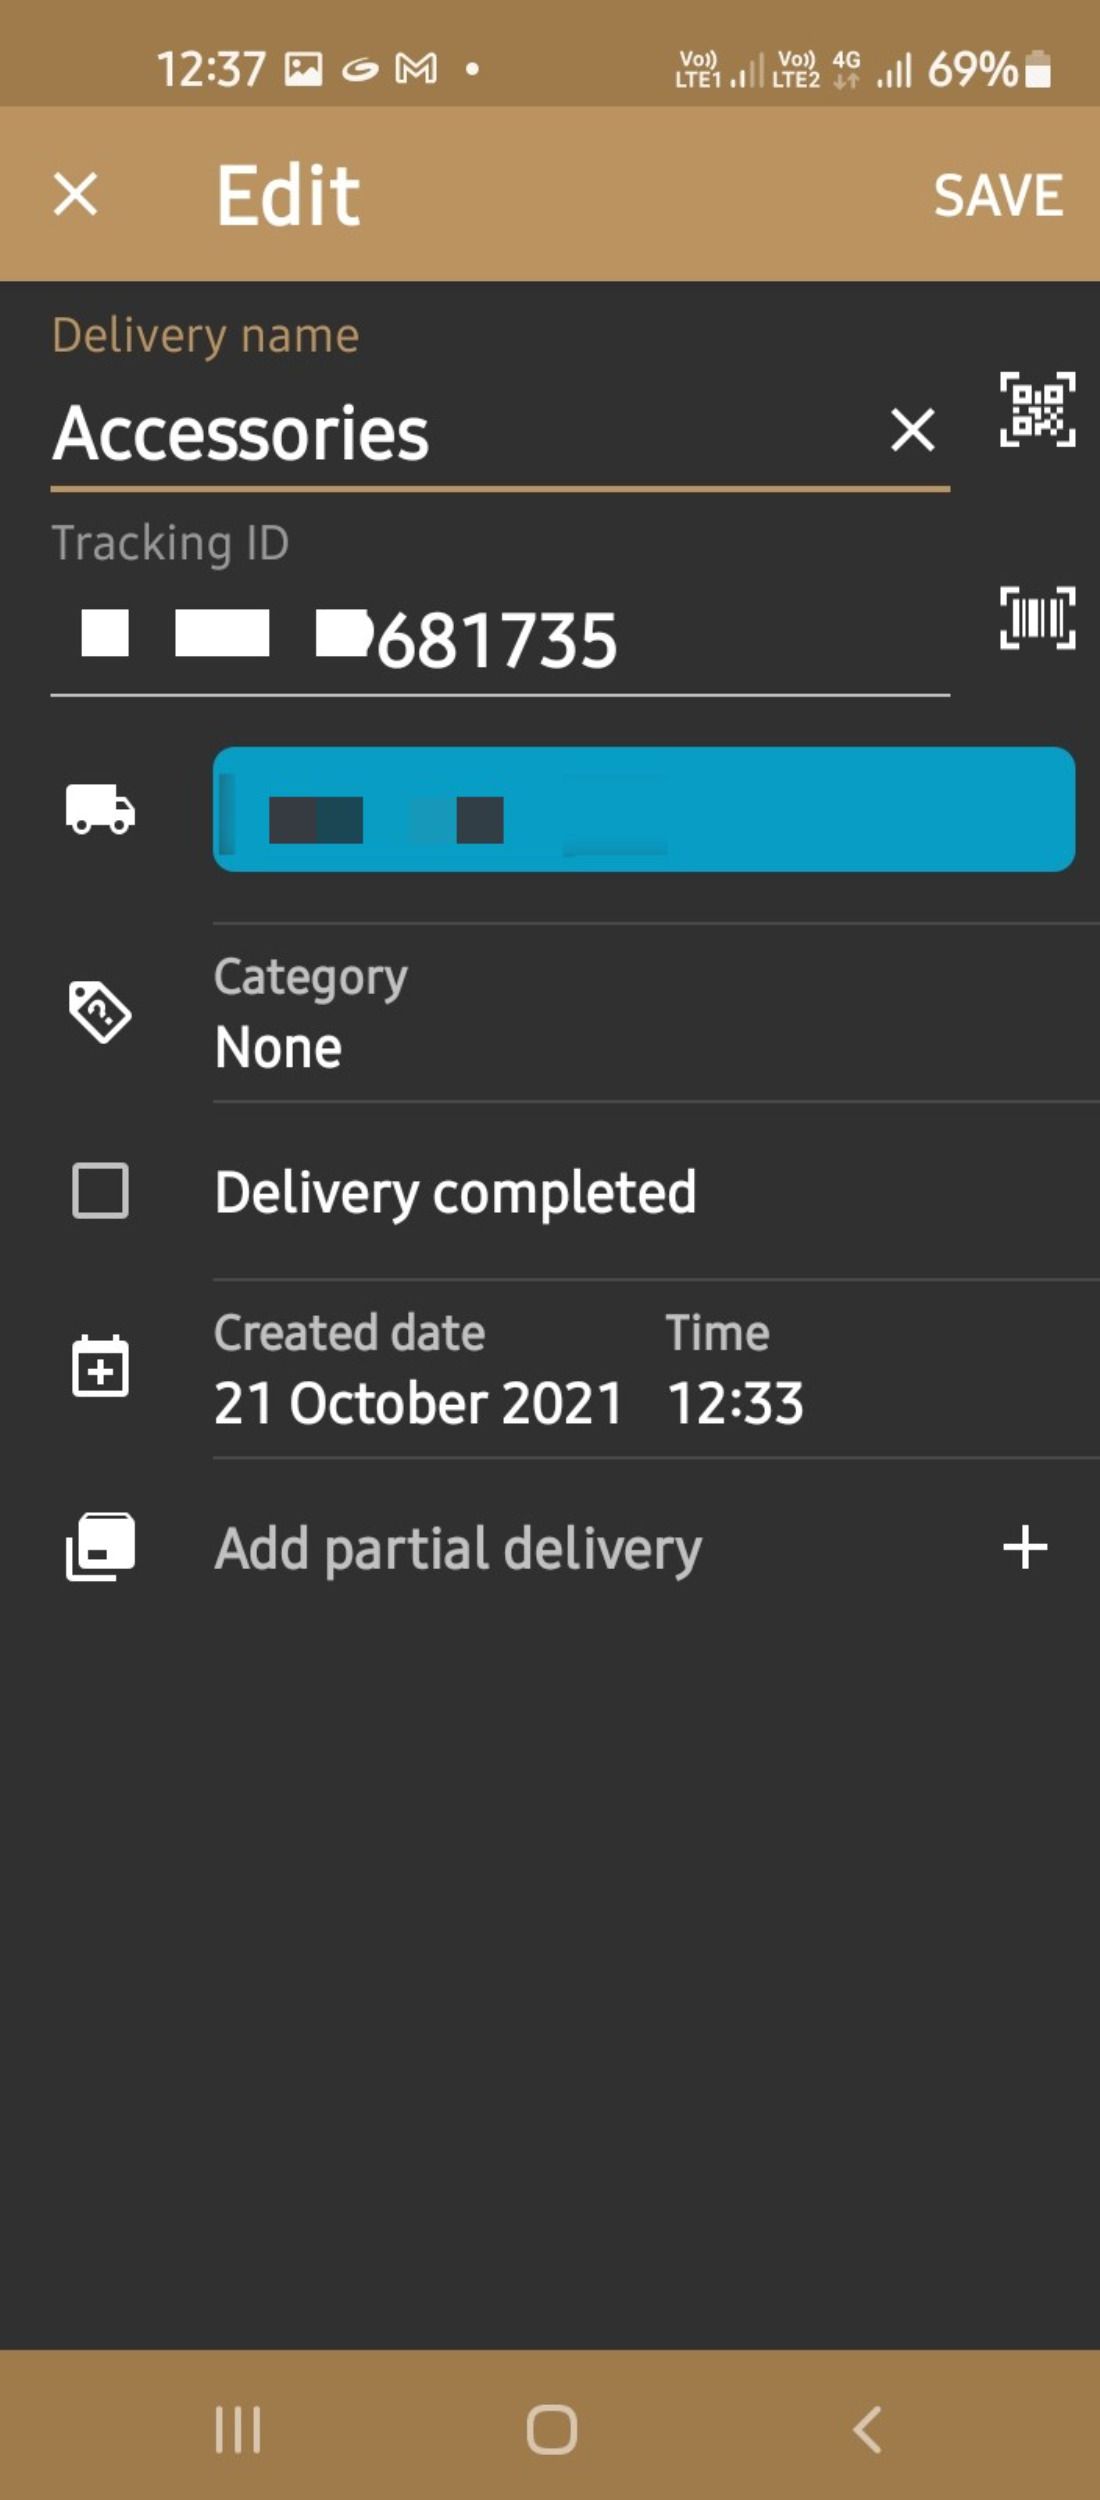 Parcel tracking in Deliveries app